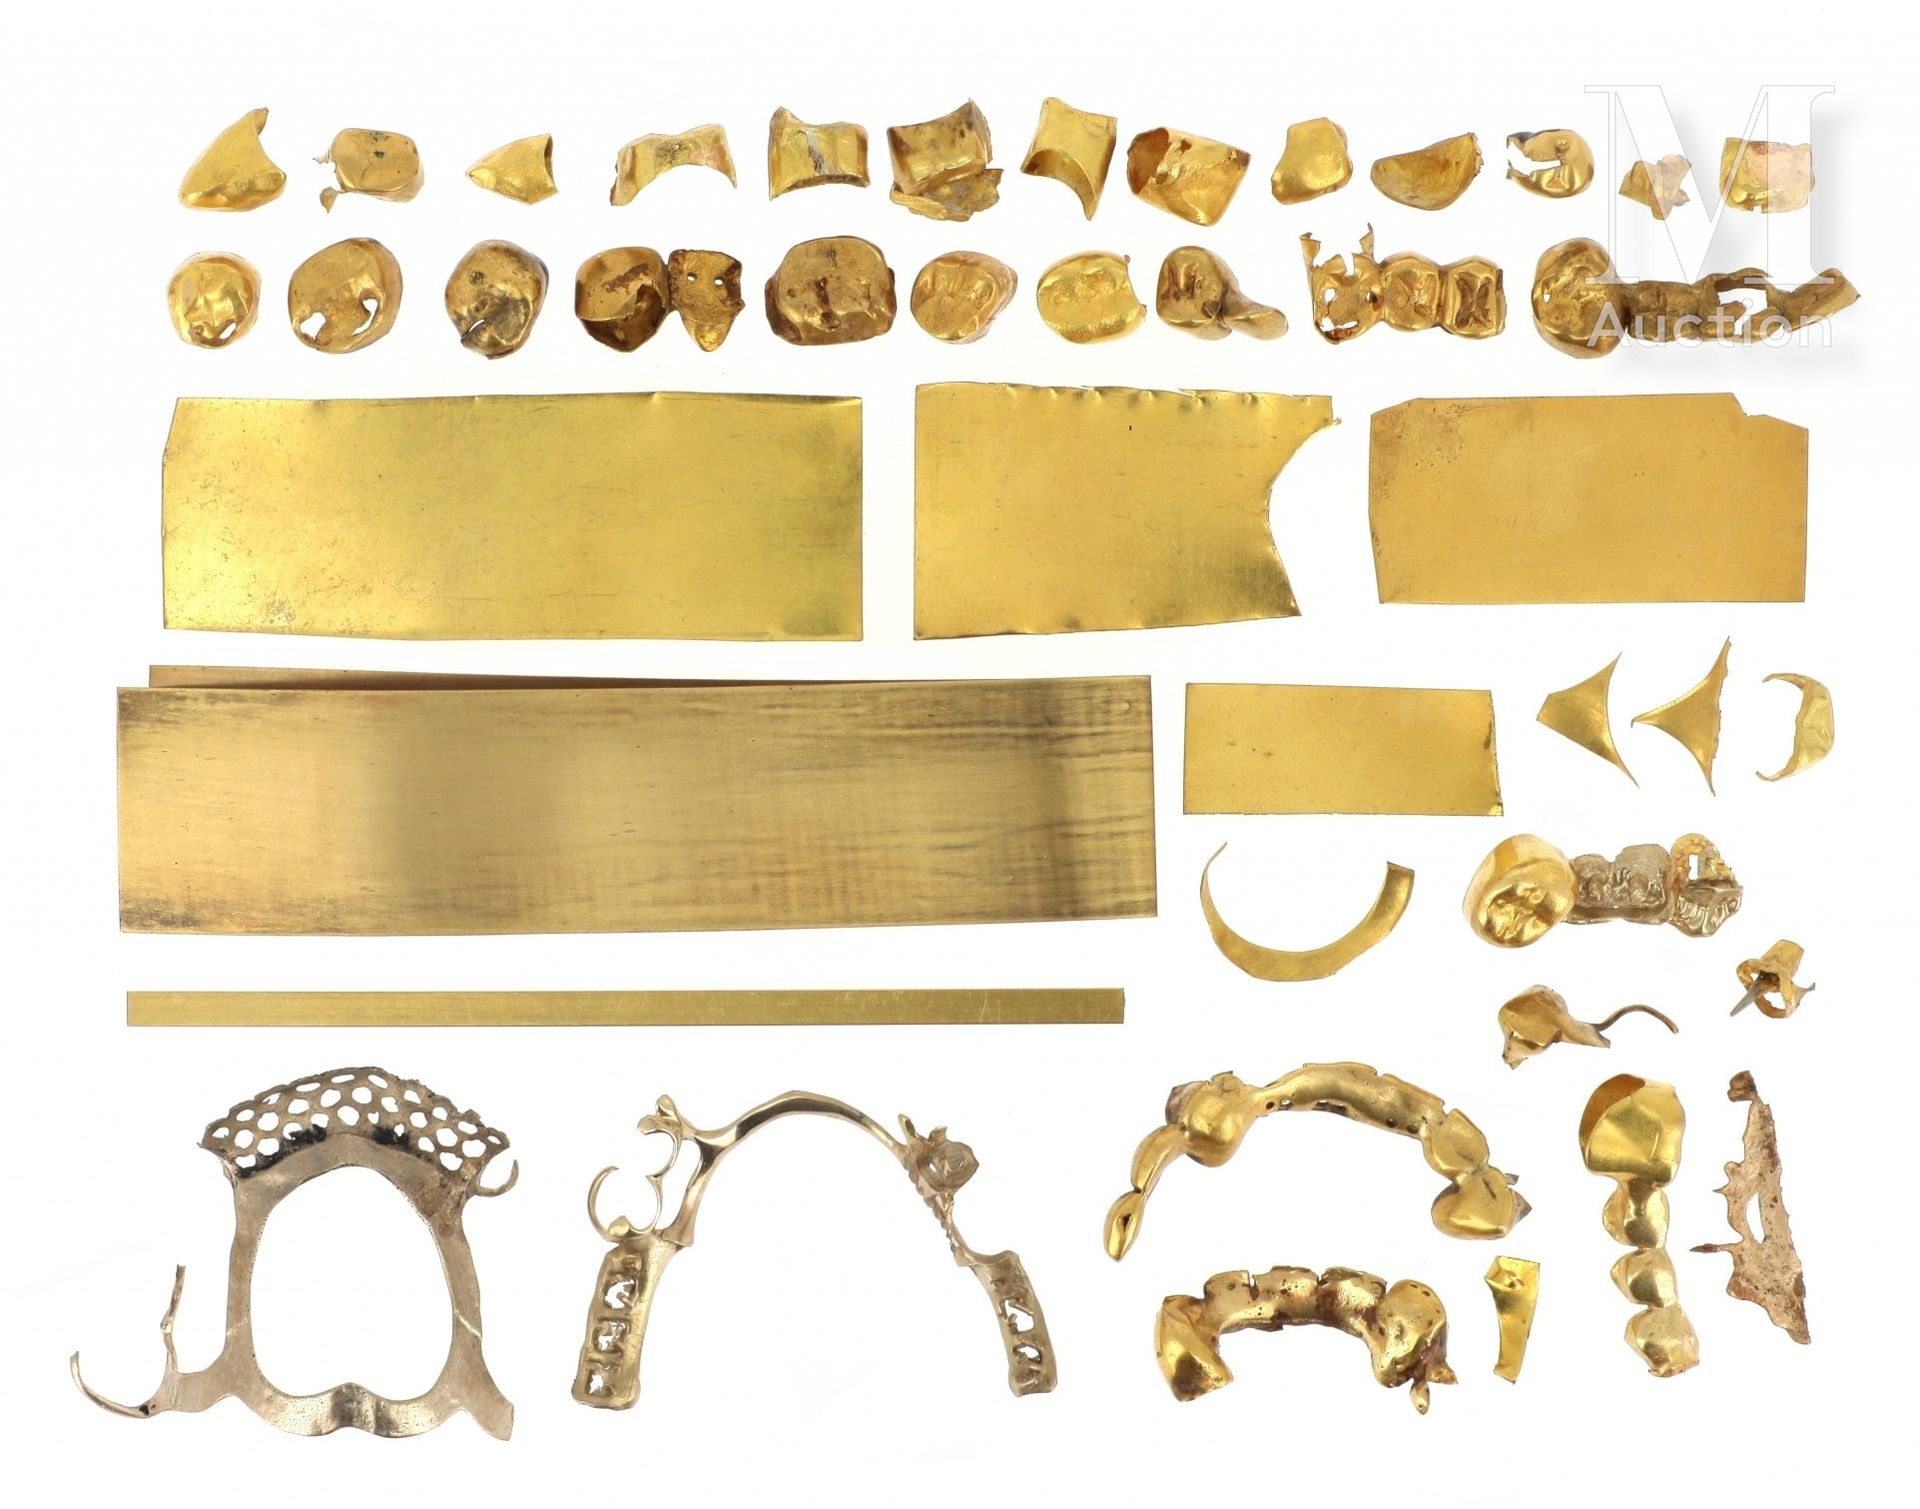 LOT DE DEBRIS 一批黄金和18K（750°/°）黄金和白金合金的碎片，包括板材、牙科黄金碎片、珠宝镶嵌残留物和杂物。

毛重：149.8克。

原样&hellip;